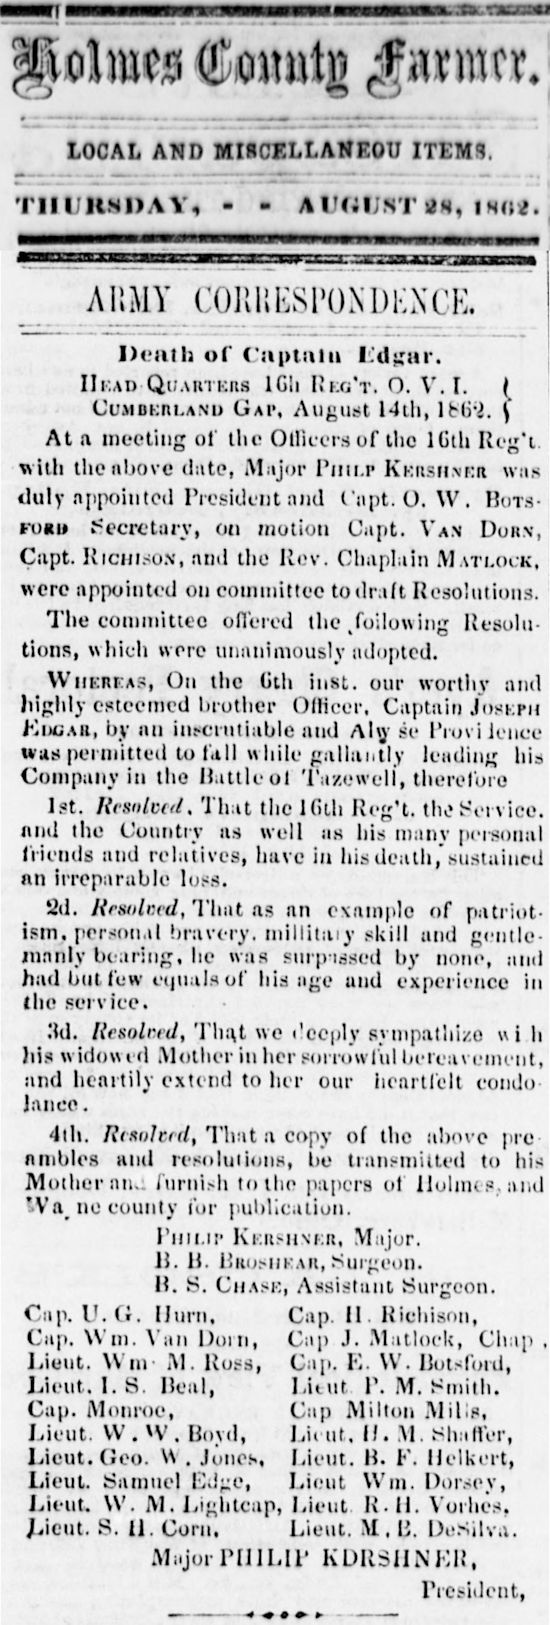 newspaper article on death of Capt. Joseph Edgar